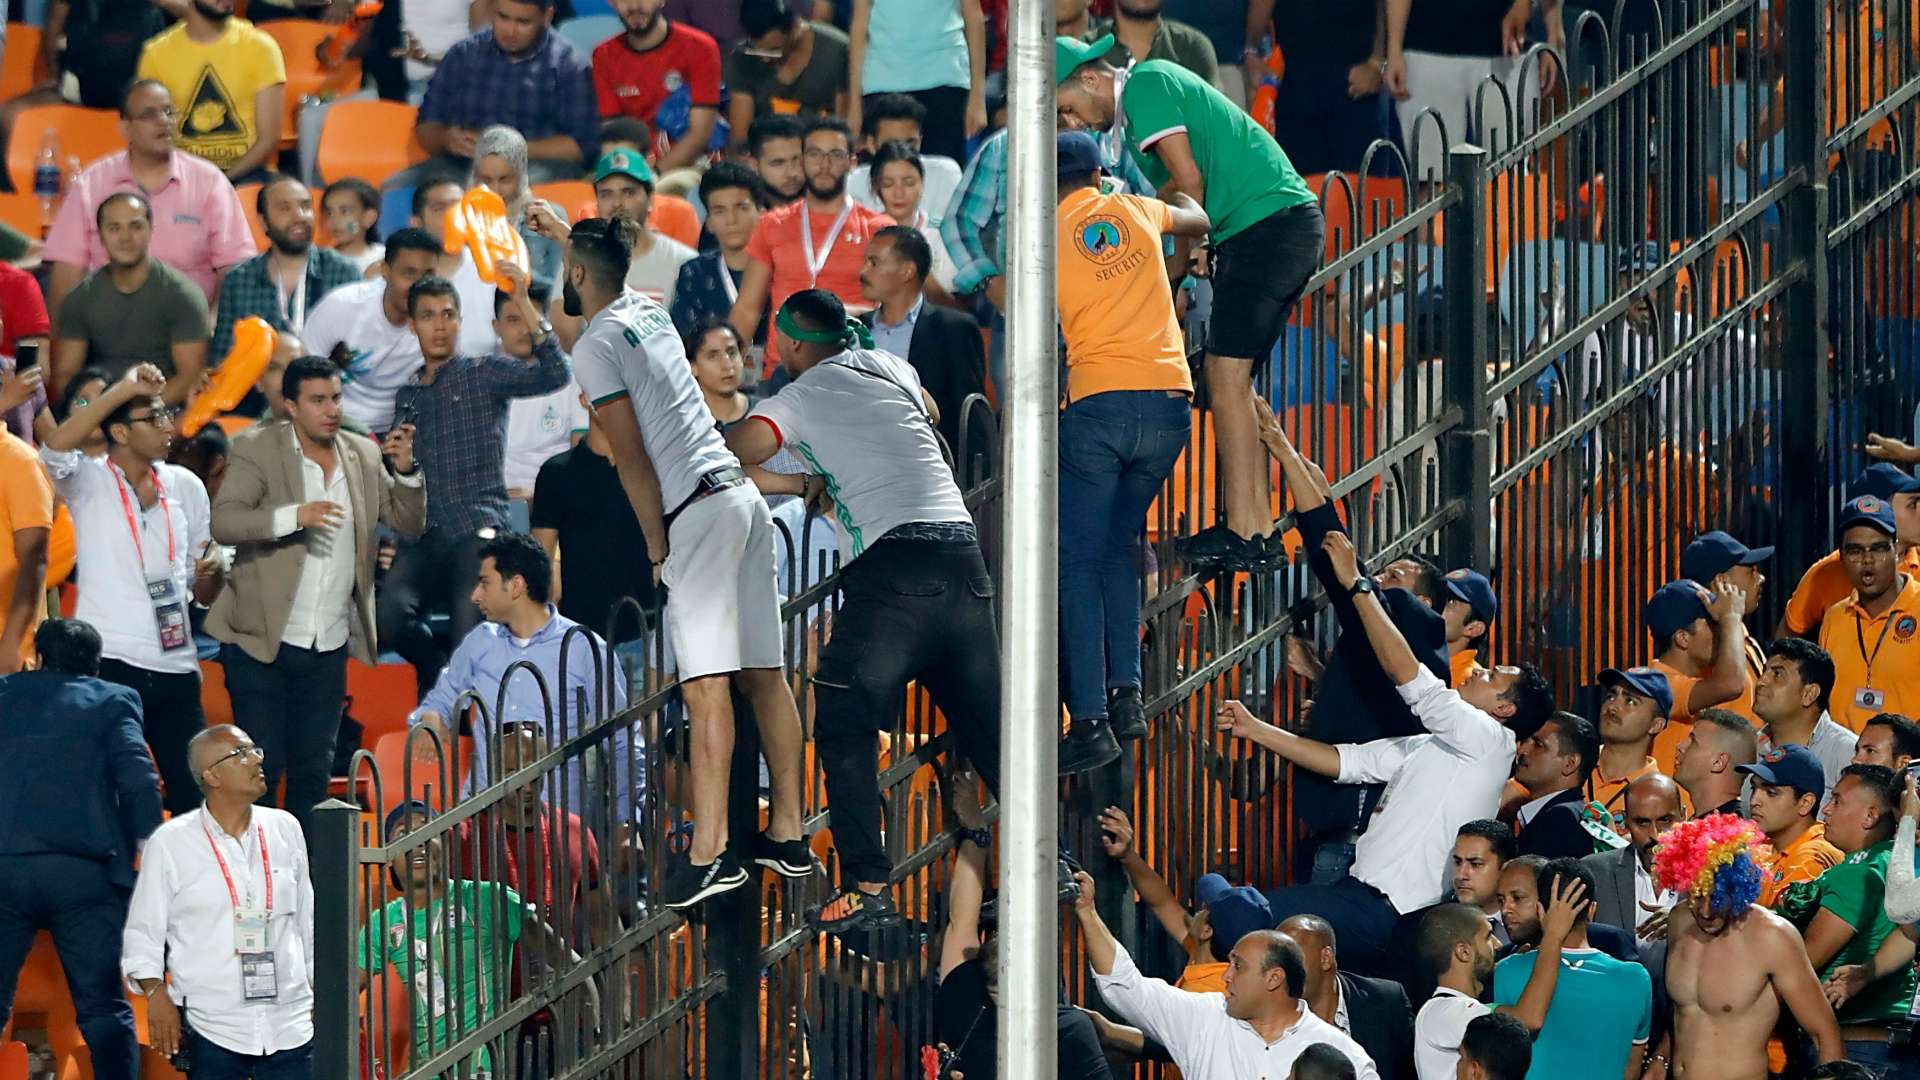 Algeria Fans